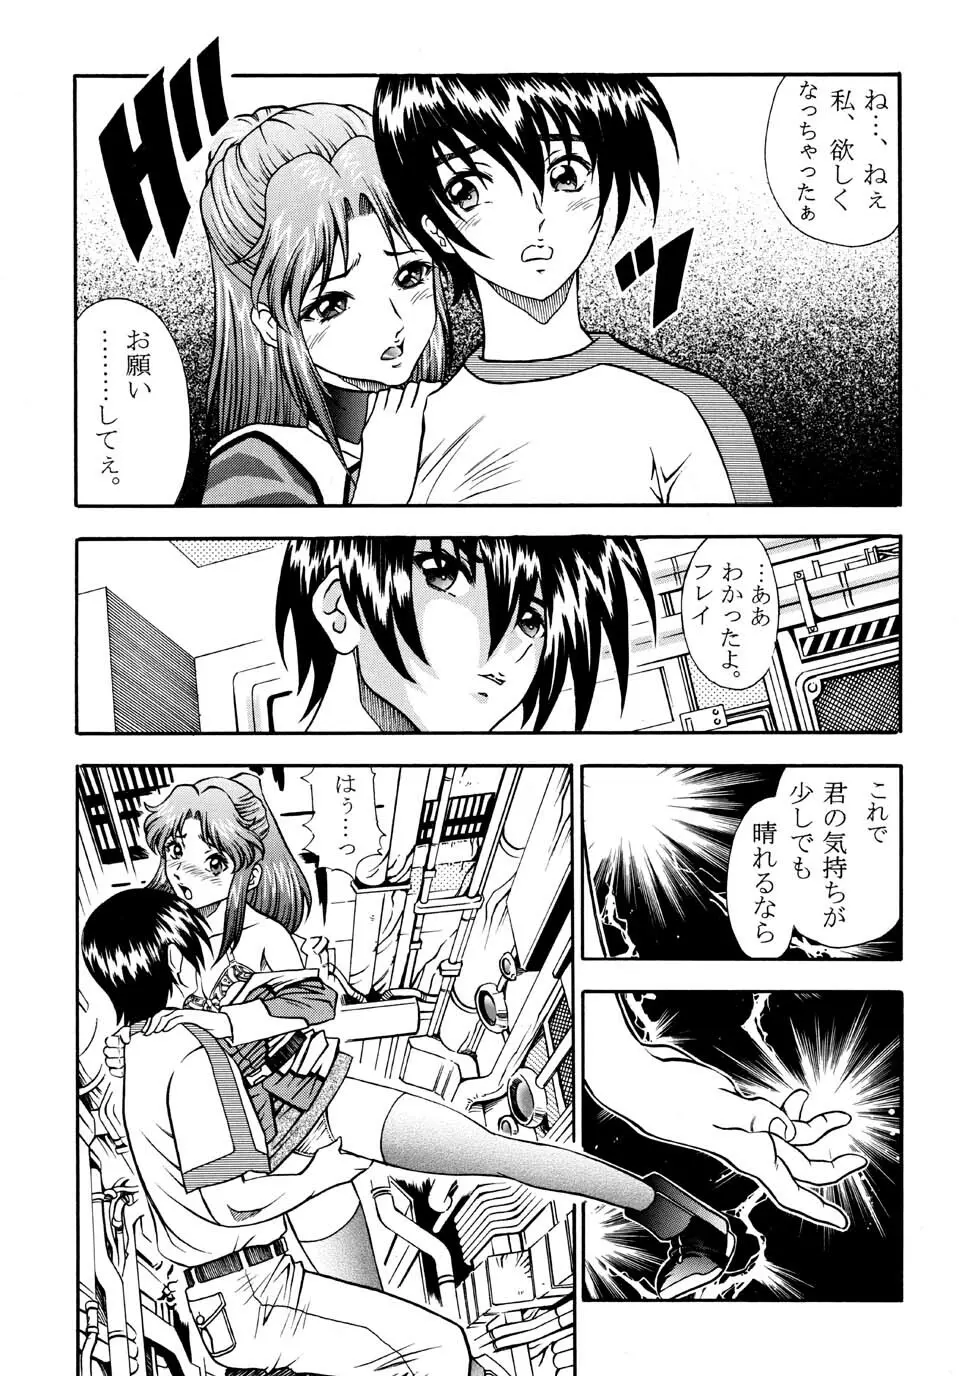 Gundam-H 3 11ページ